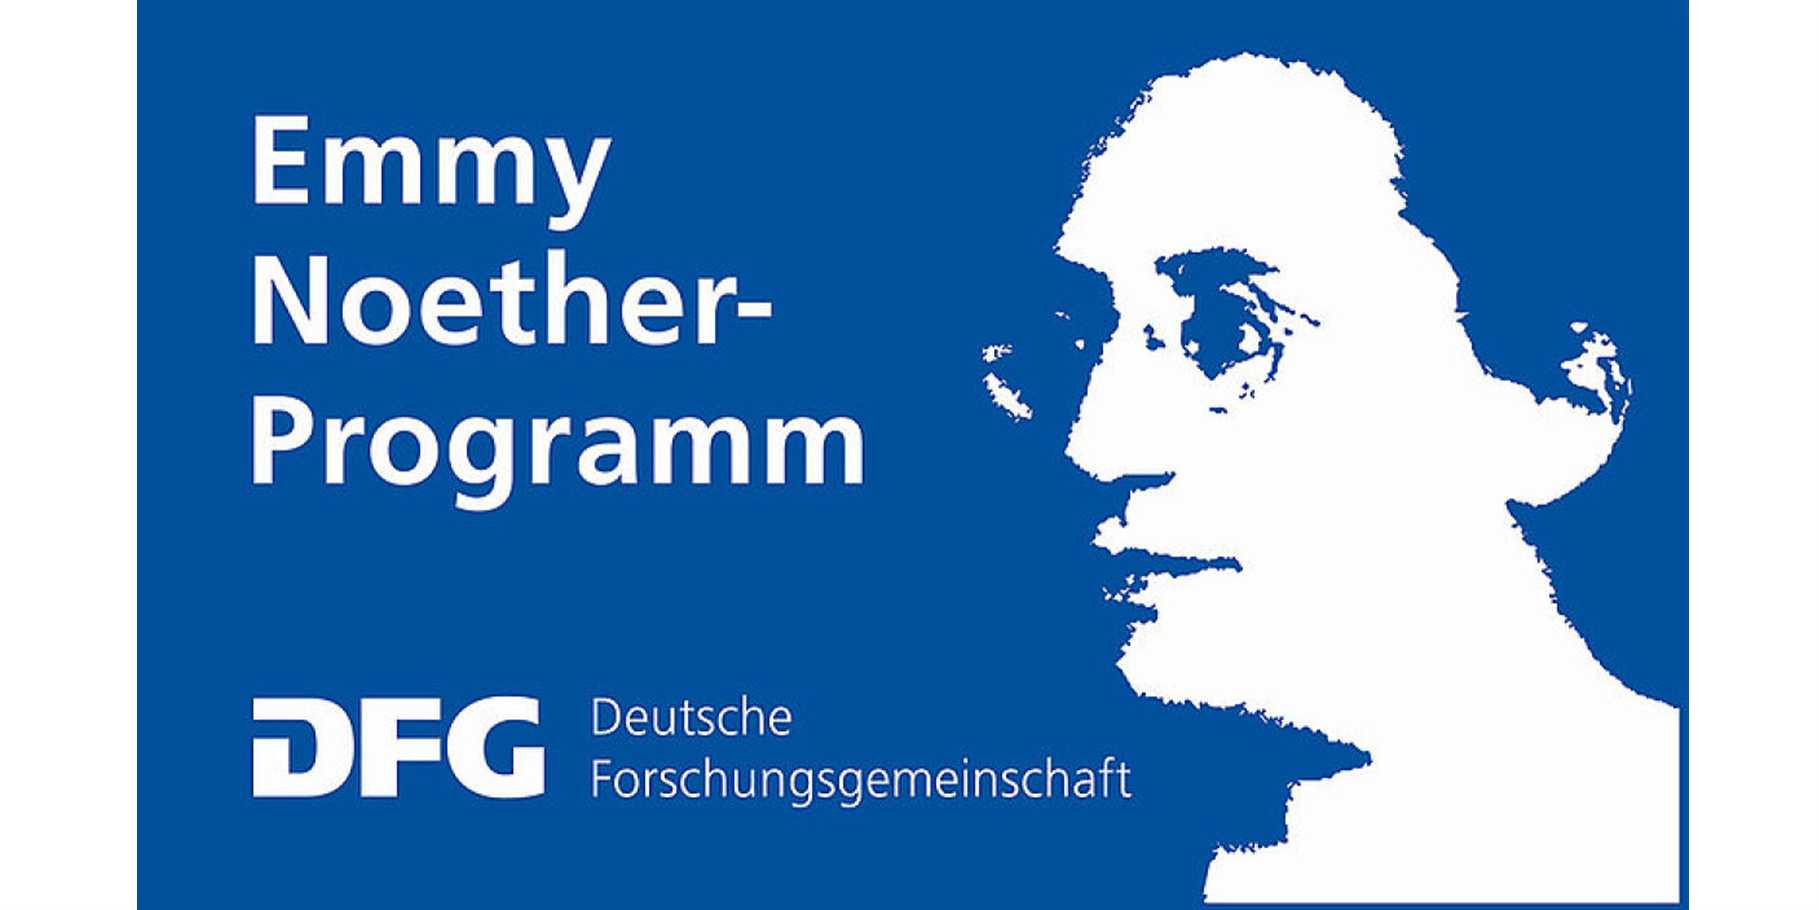 Emmy Noether-Programm DFG